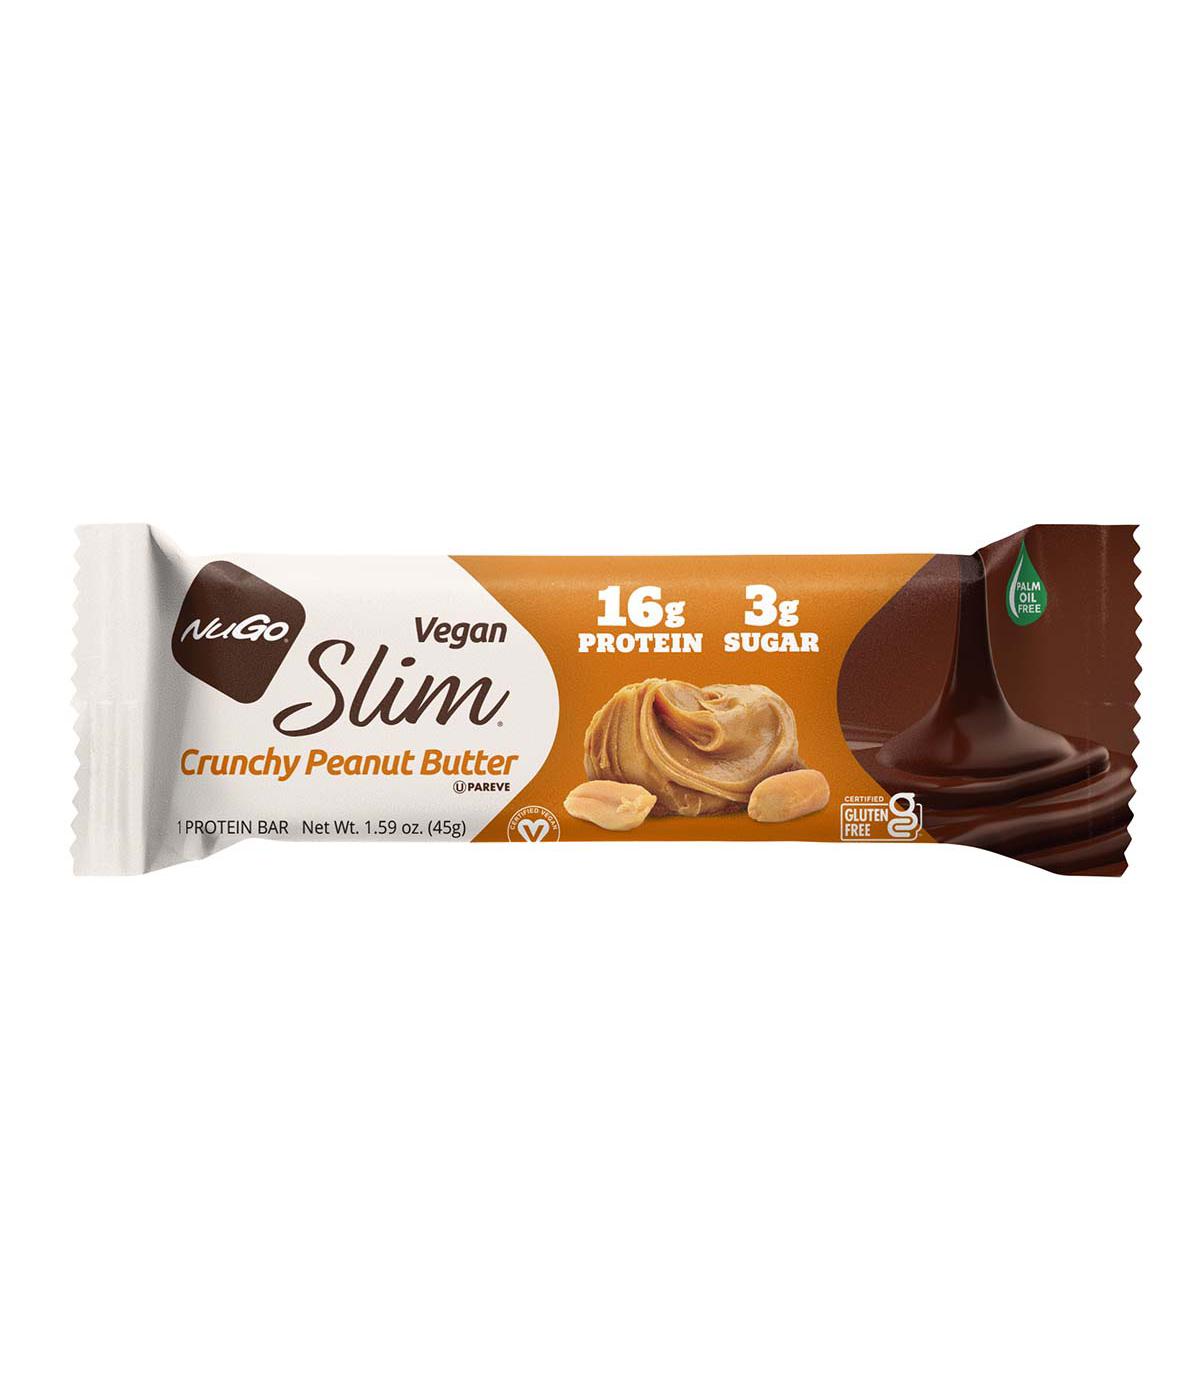 NuGo Slim Low Sugar 16g Protein Bar - Crunchy Peanut Butter; image 1 of 5